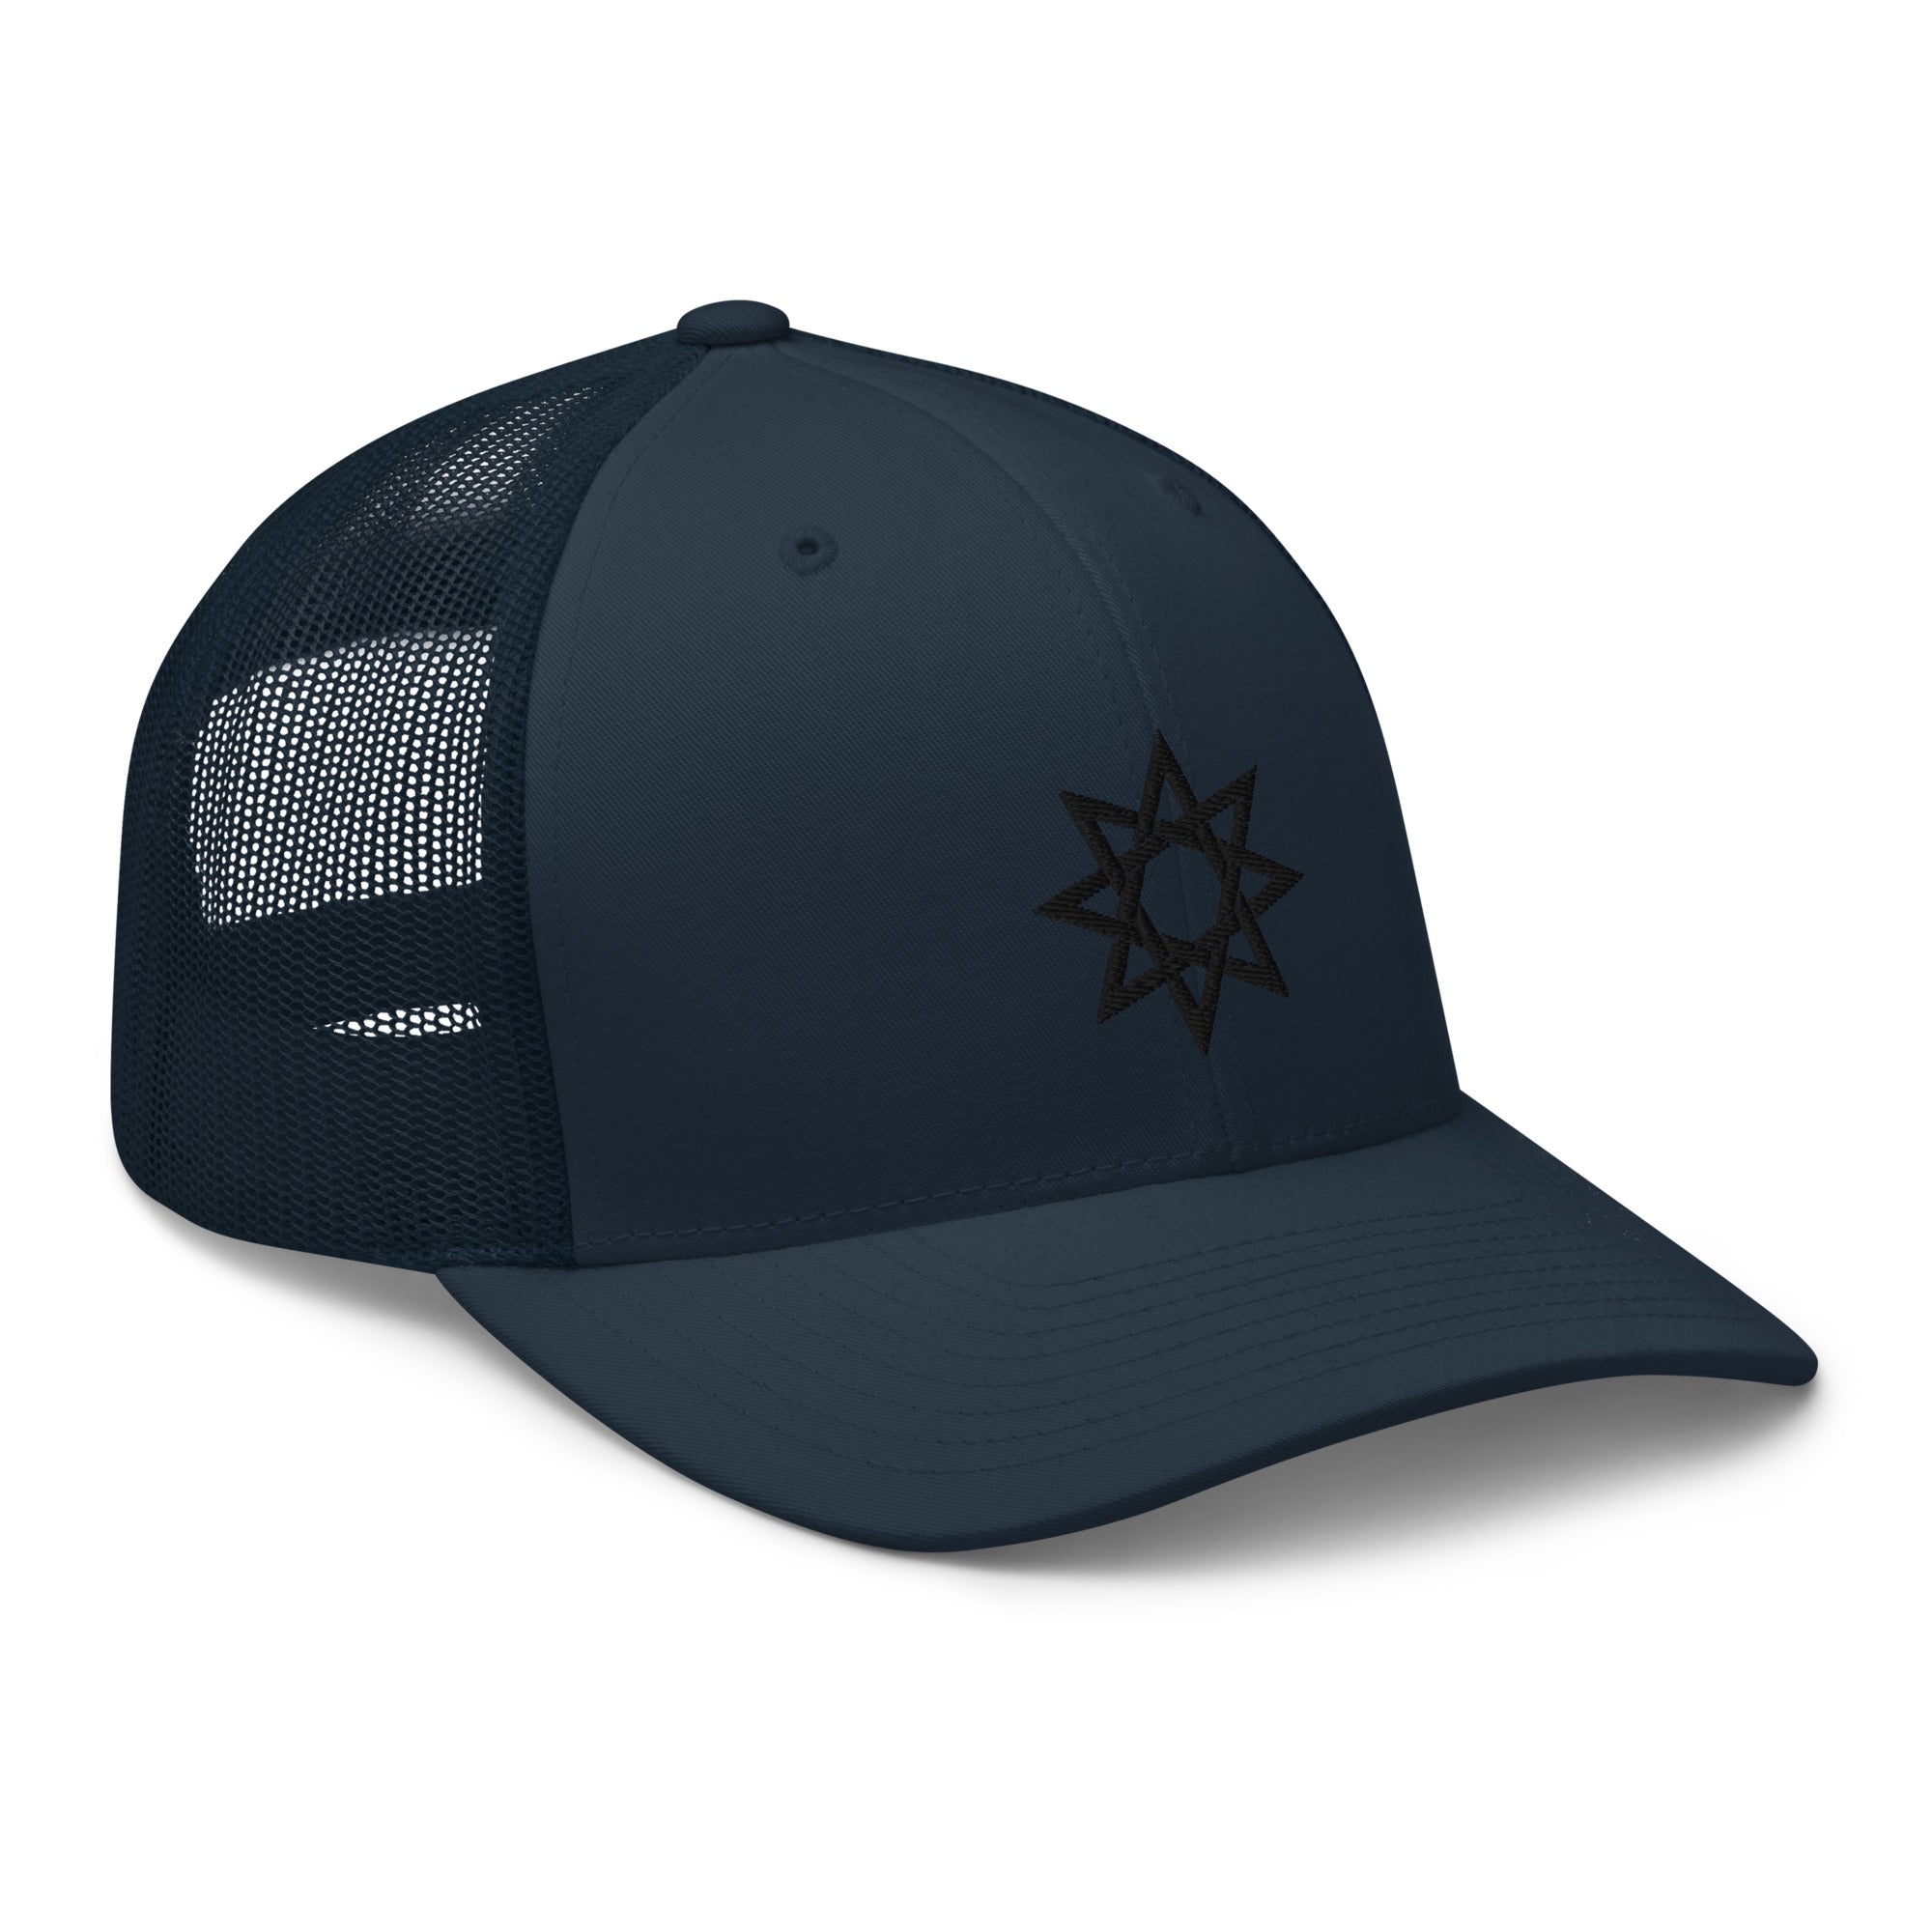 Black 8 Point Star Octagram Anu God Embroidered Retro Trucker Cap Snapback Hat